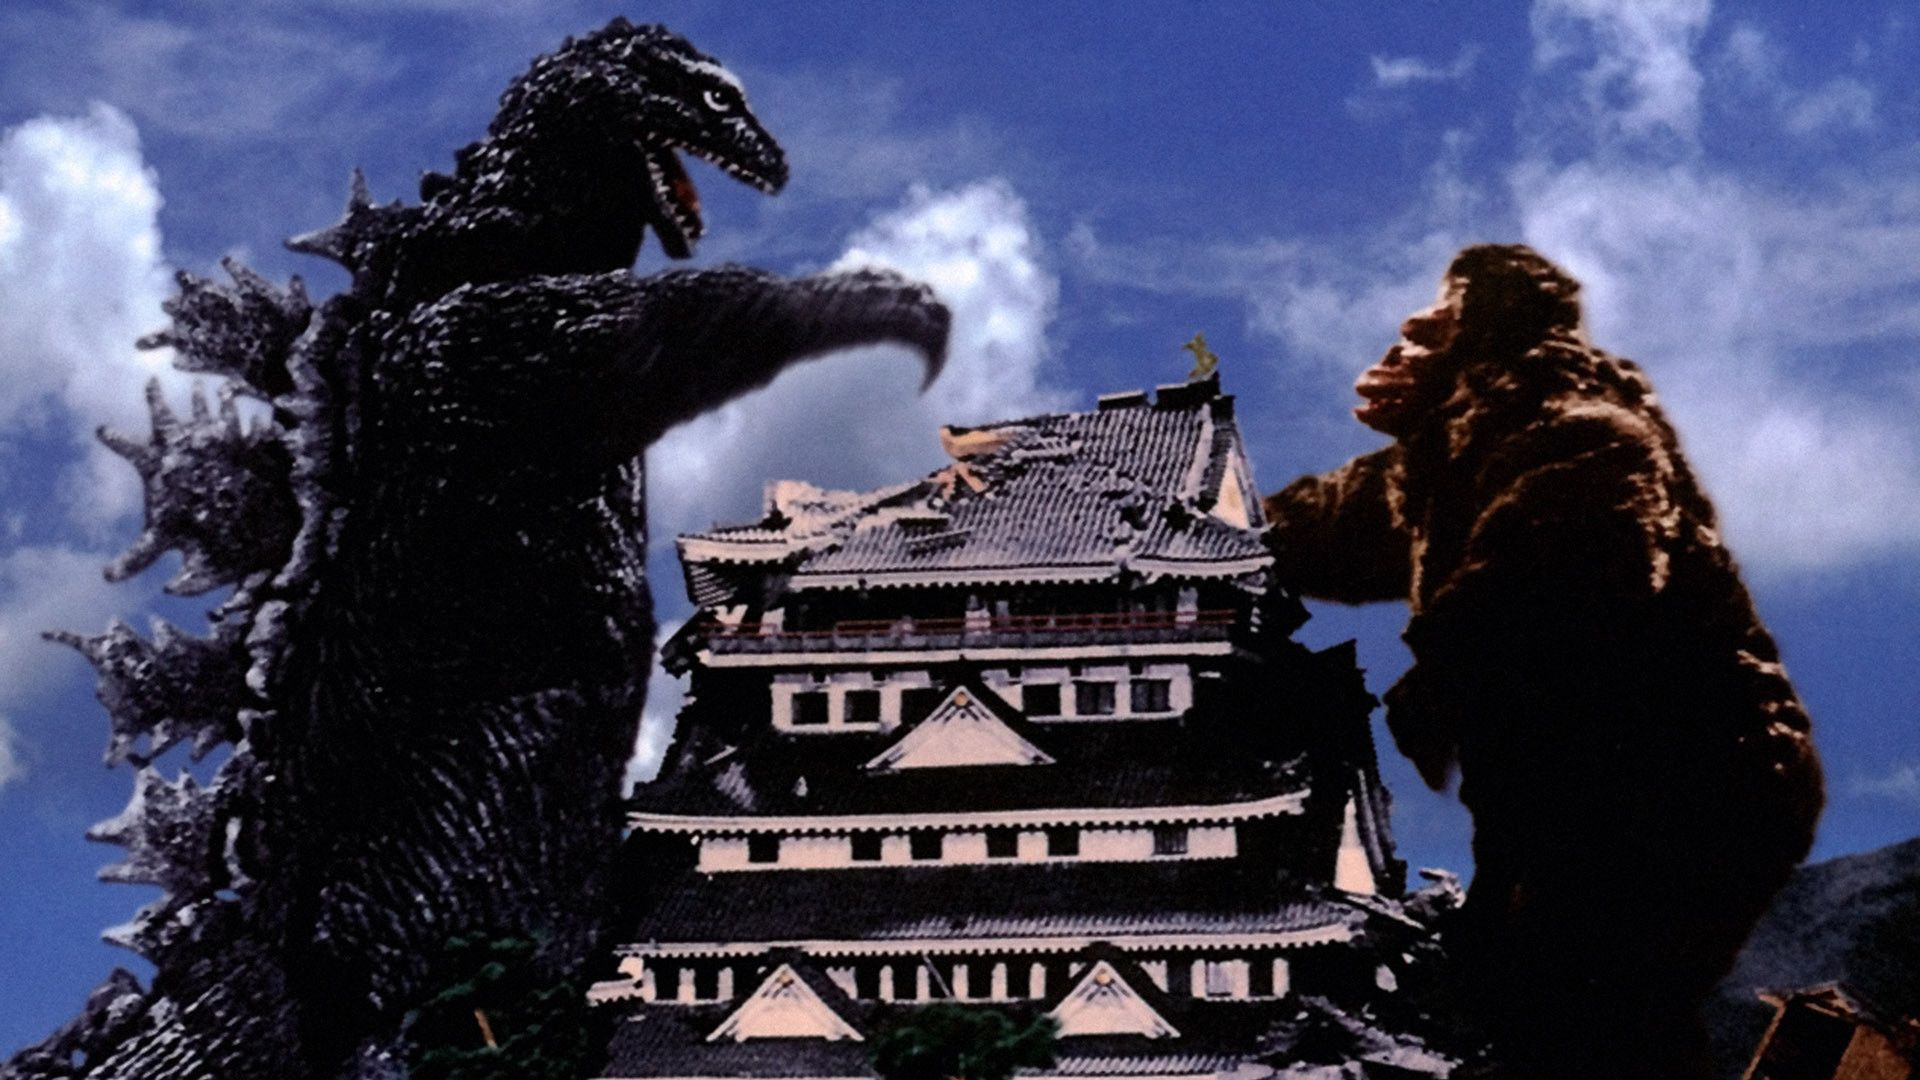 Godzilla Vs. King Kong: The Human Ethics Of Intra Monster Violence